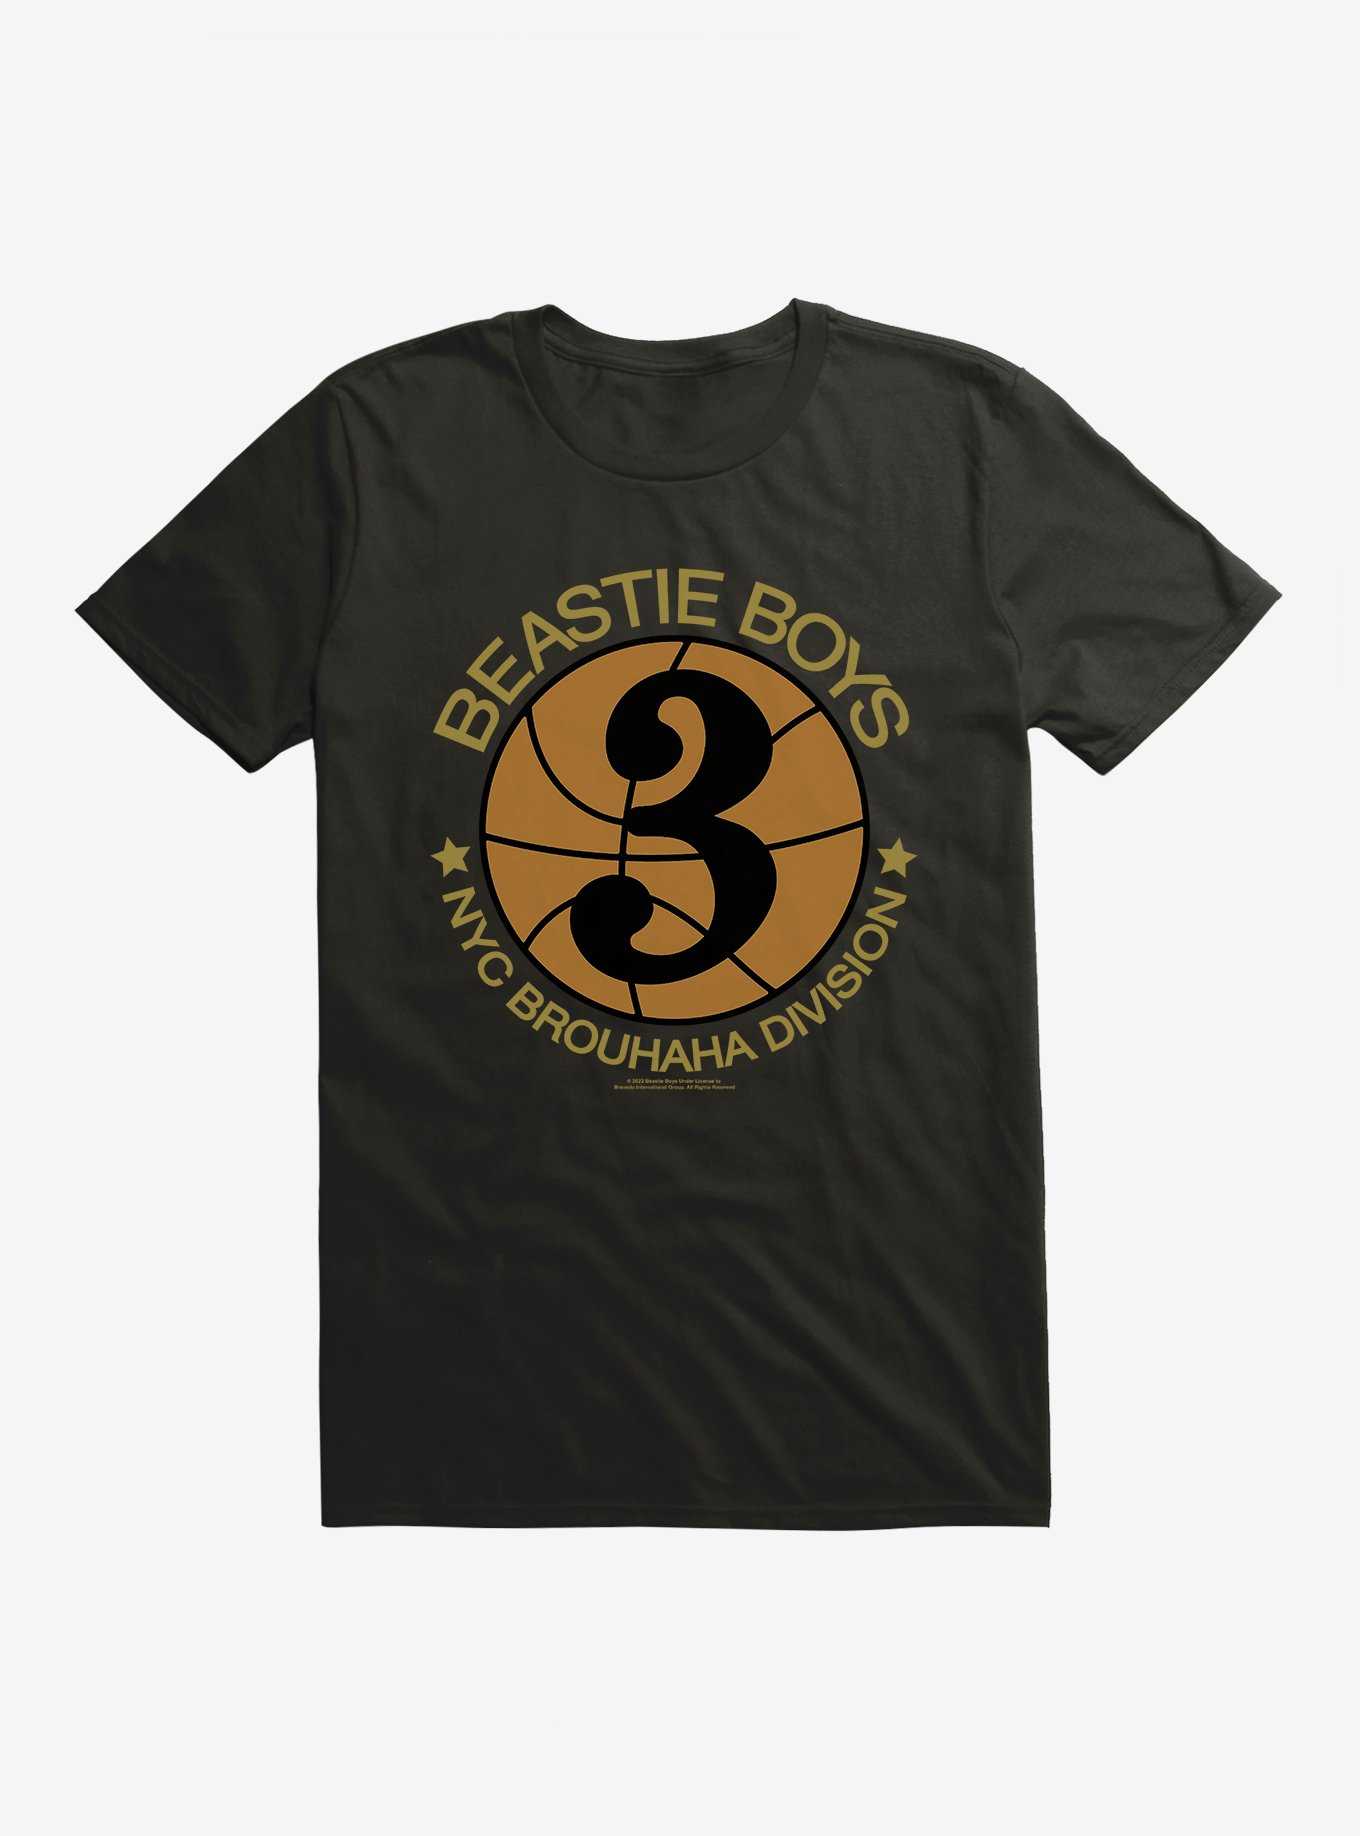 Beastie Boys NYC Brouhaha Division T-Shirt, , hi-res